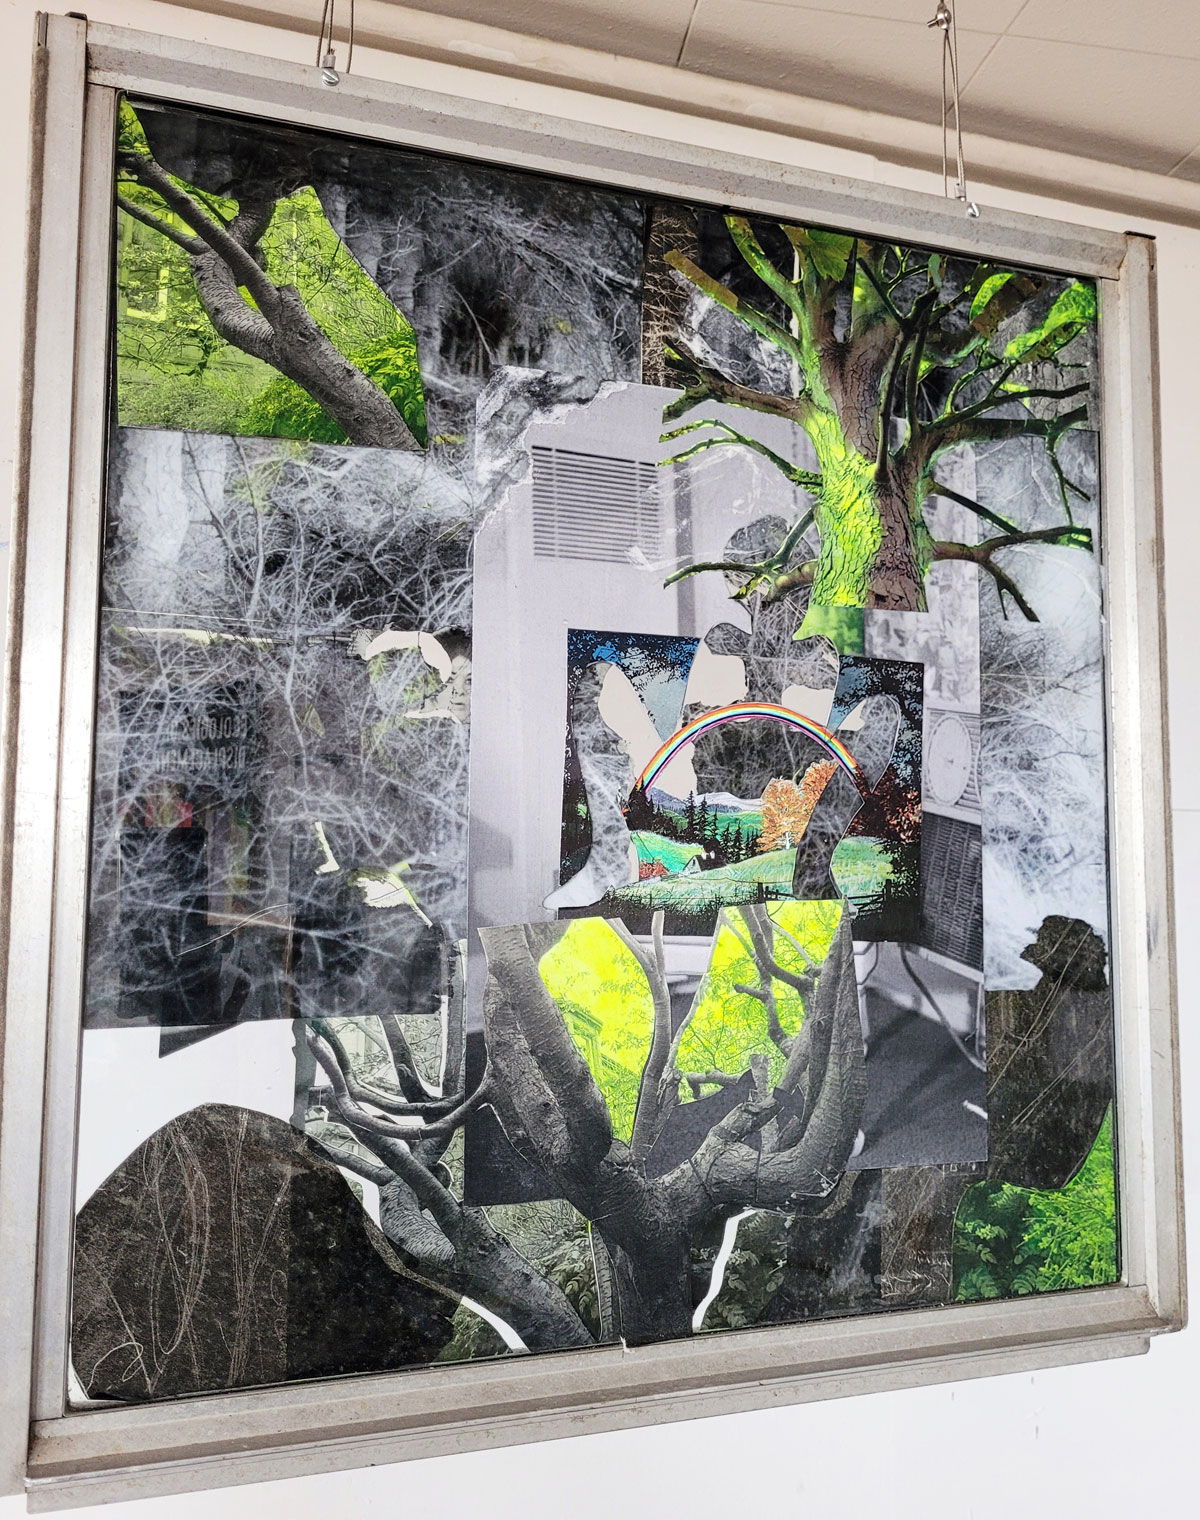 Original art, yellow-blue collage on hanging glass window